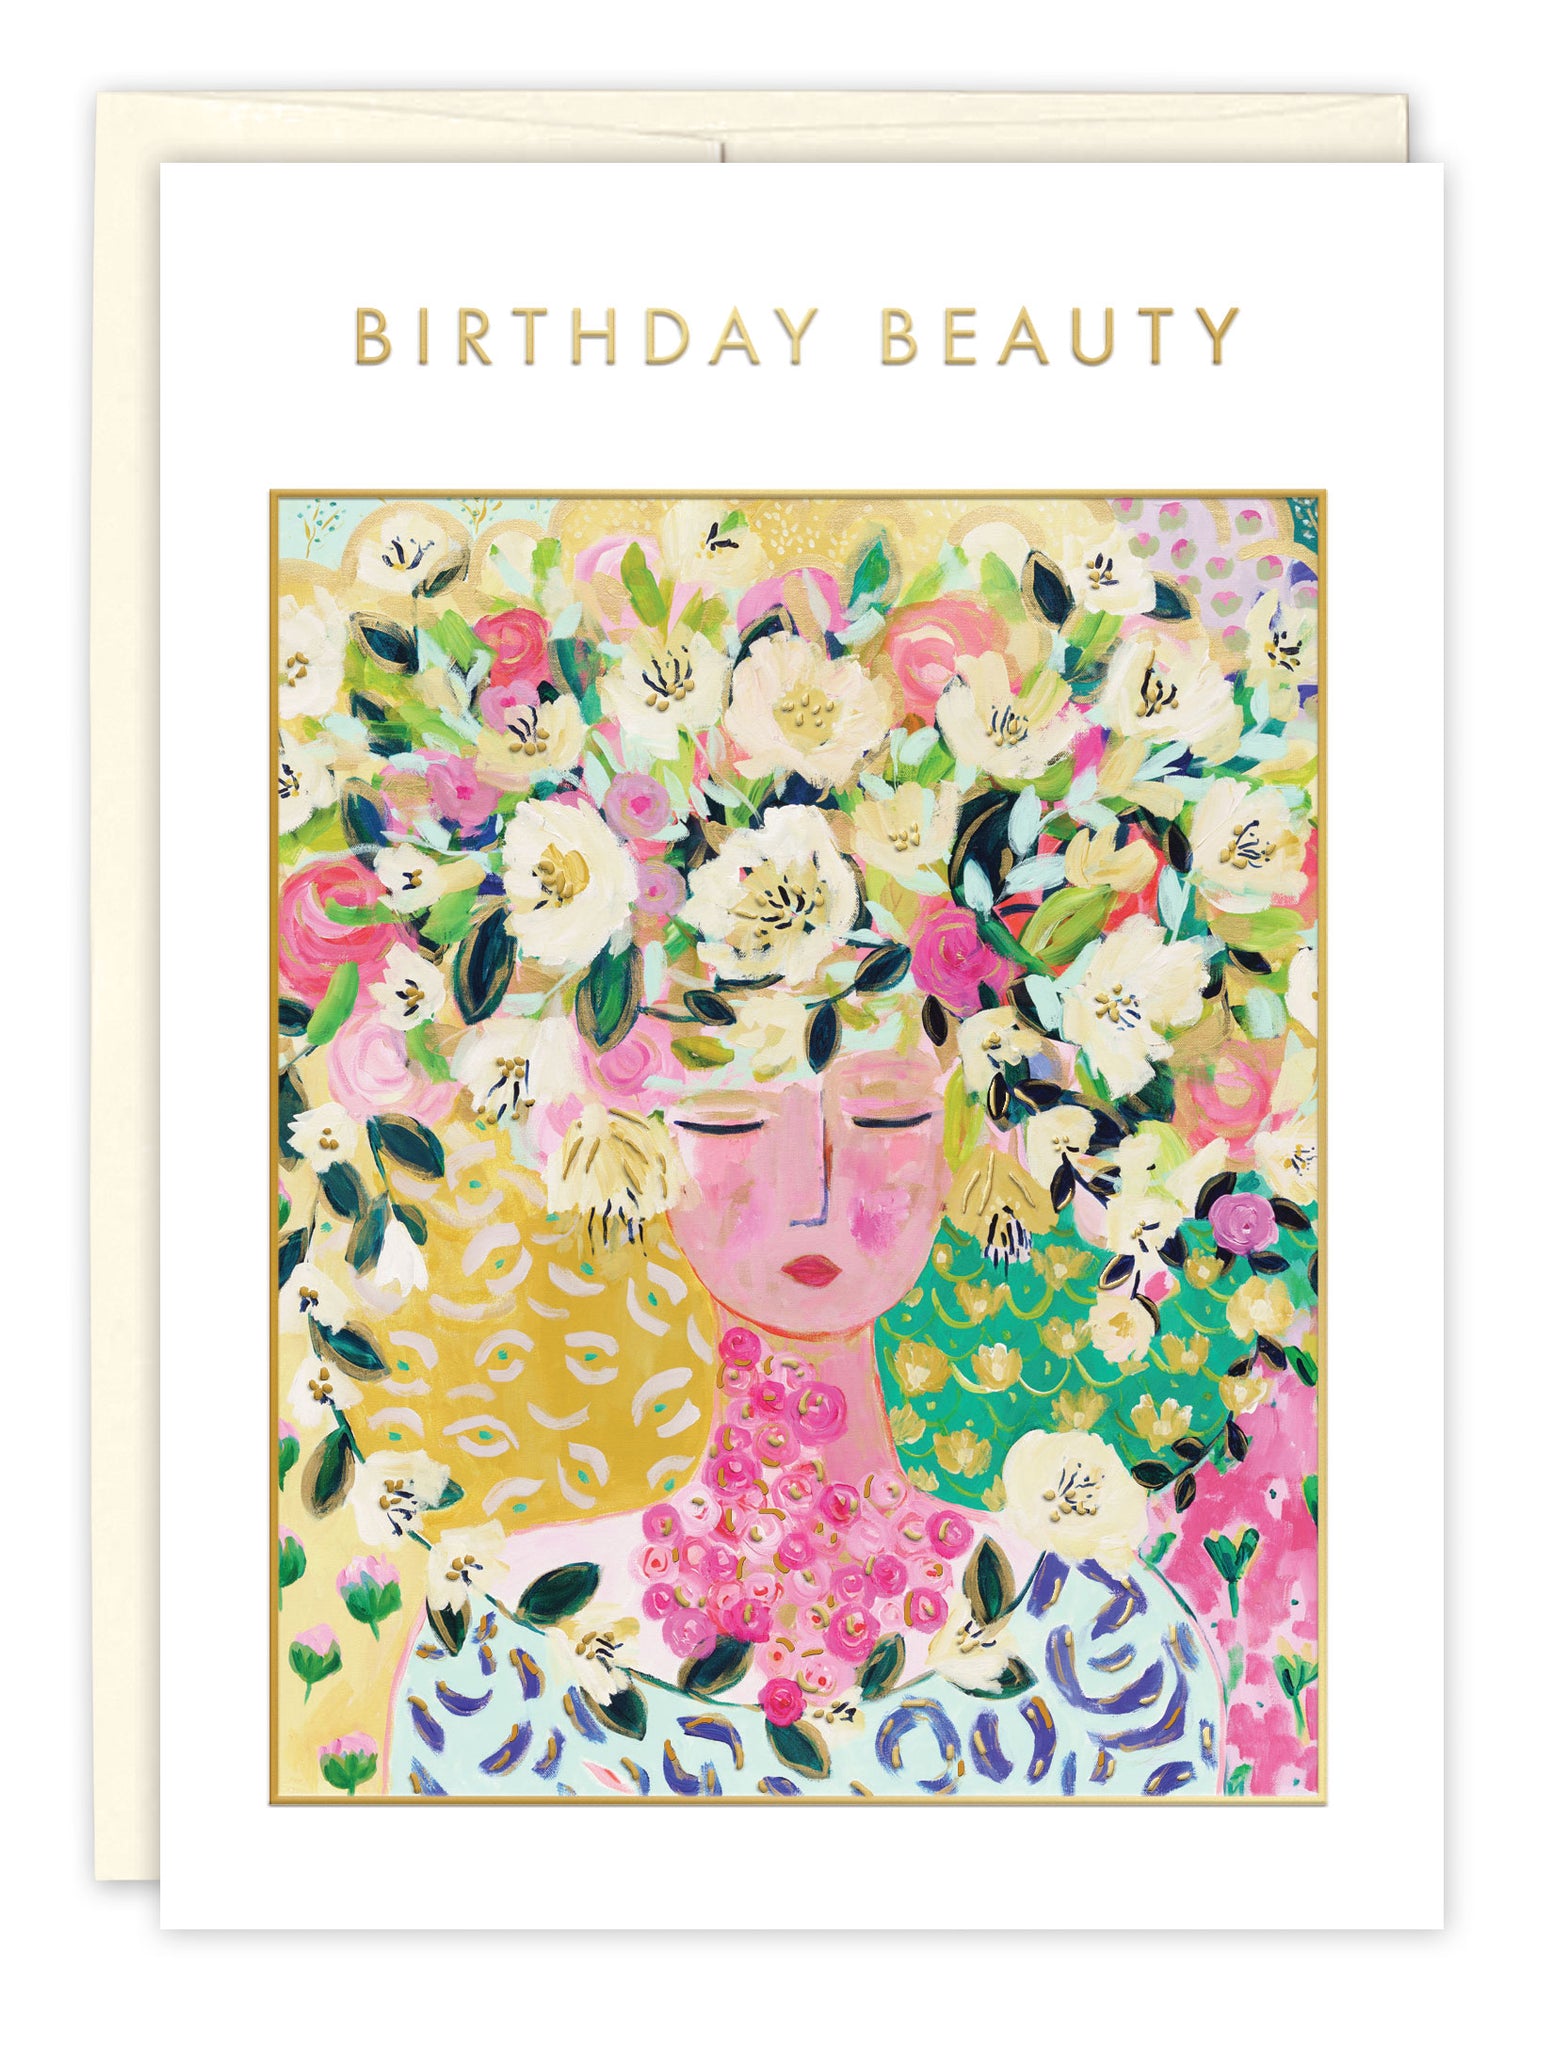 Birthday Card: BIRTHDAY BEAUTY